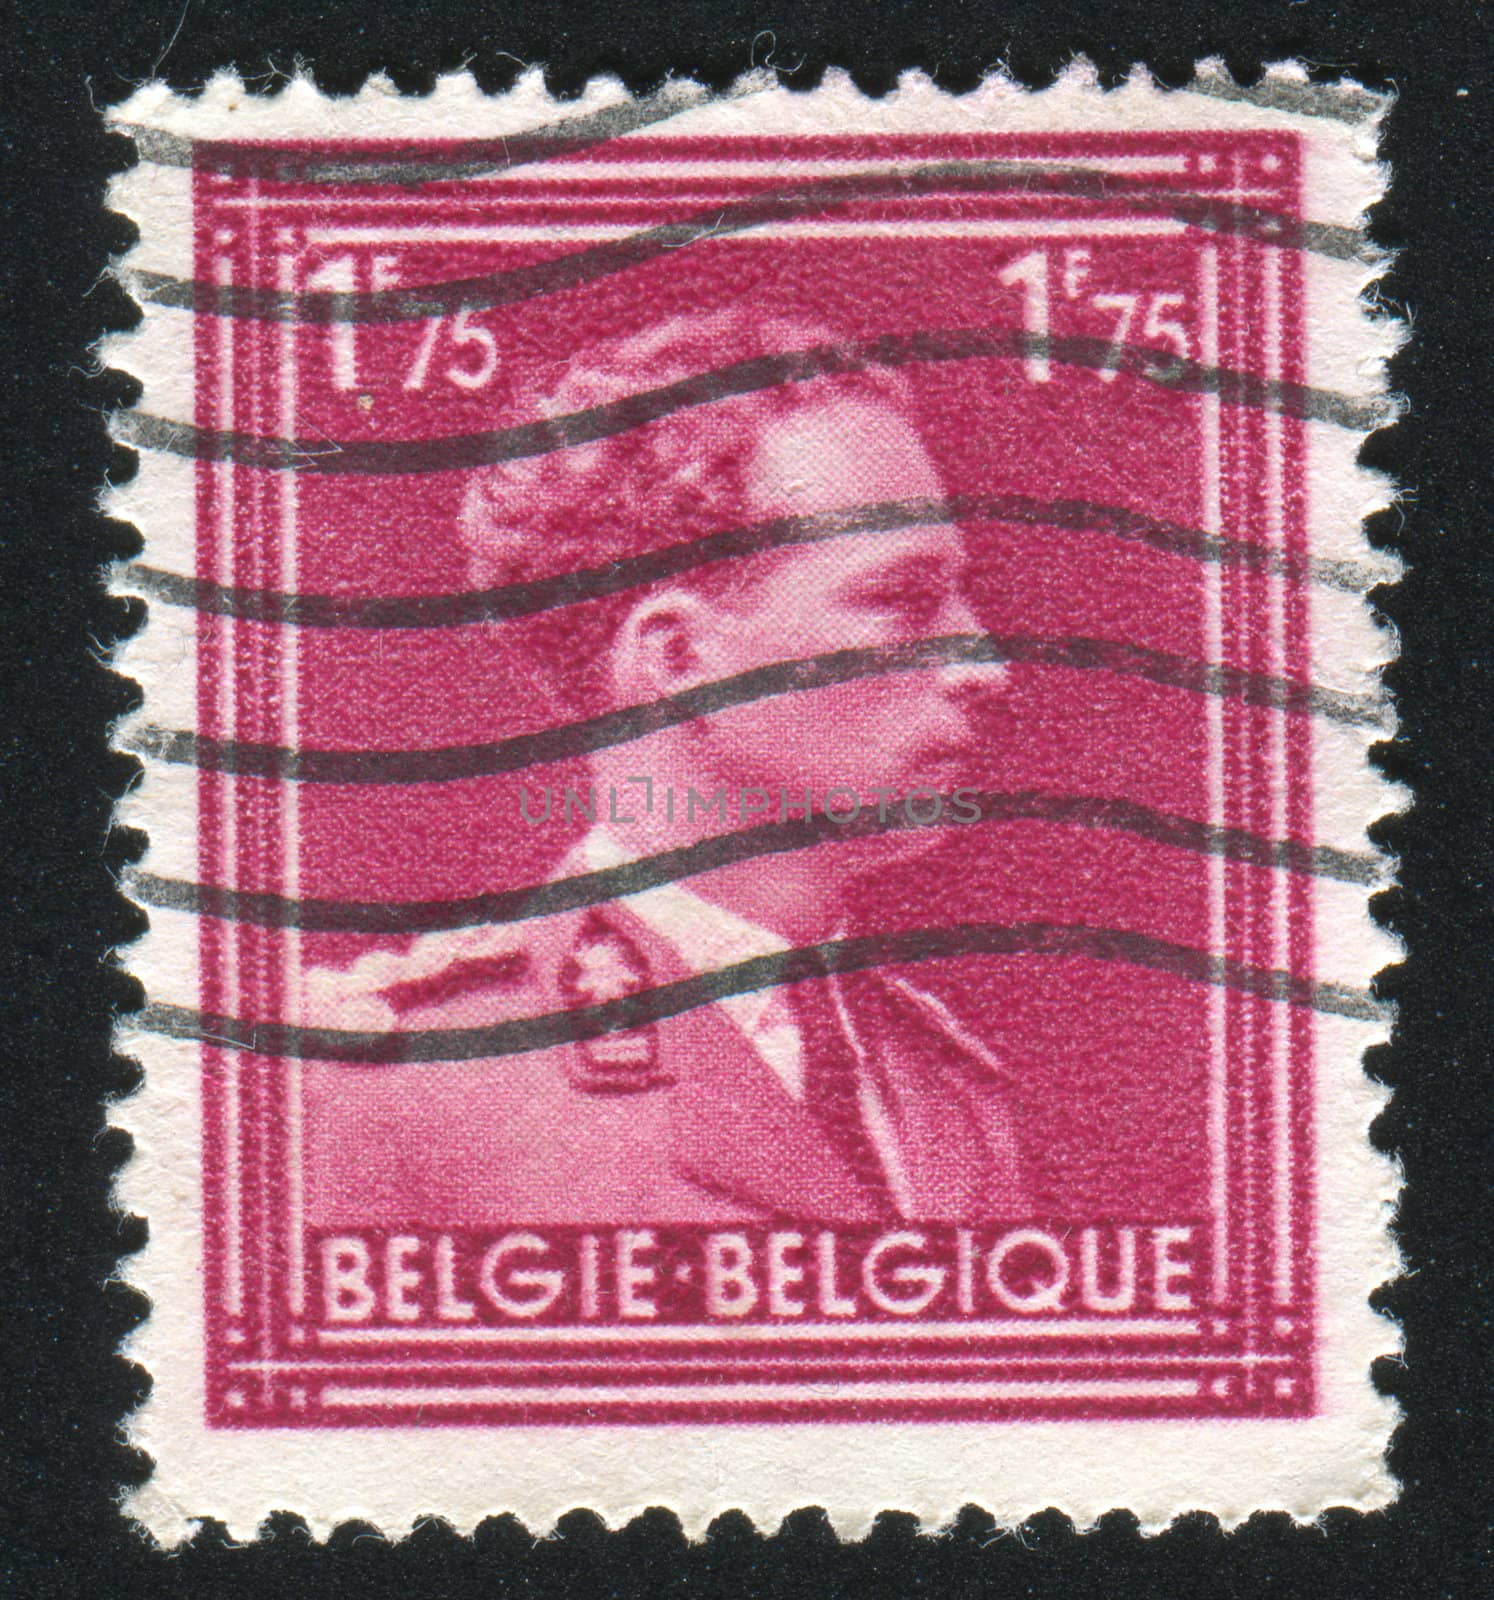 BELGIUM - CIRCA 1944: stamp printed by Belgium, shows Leopold III, circa 1944